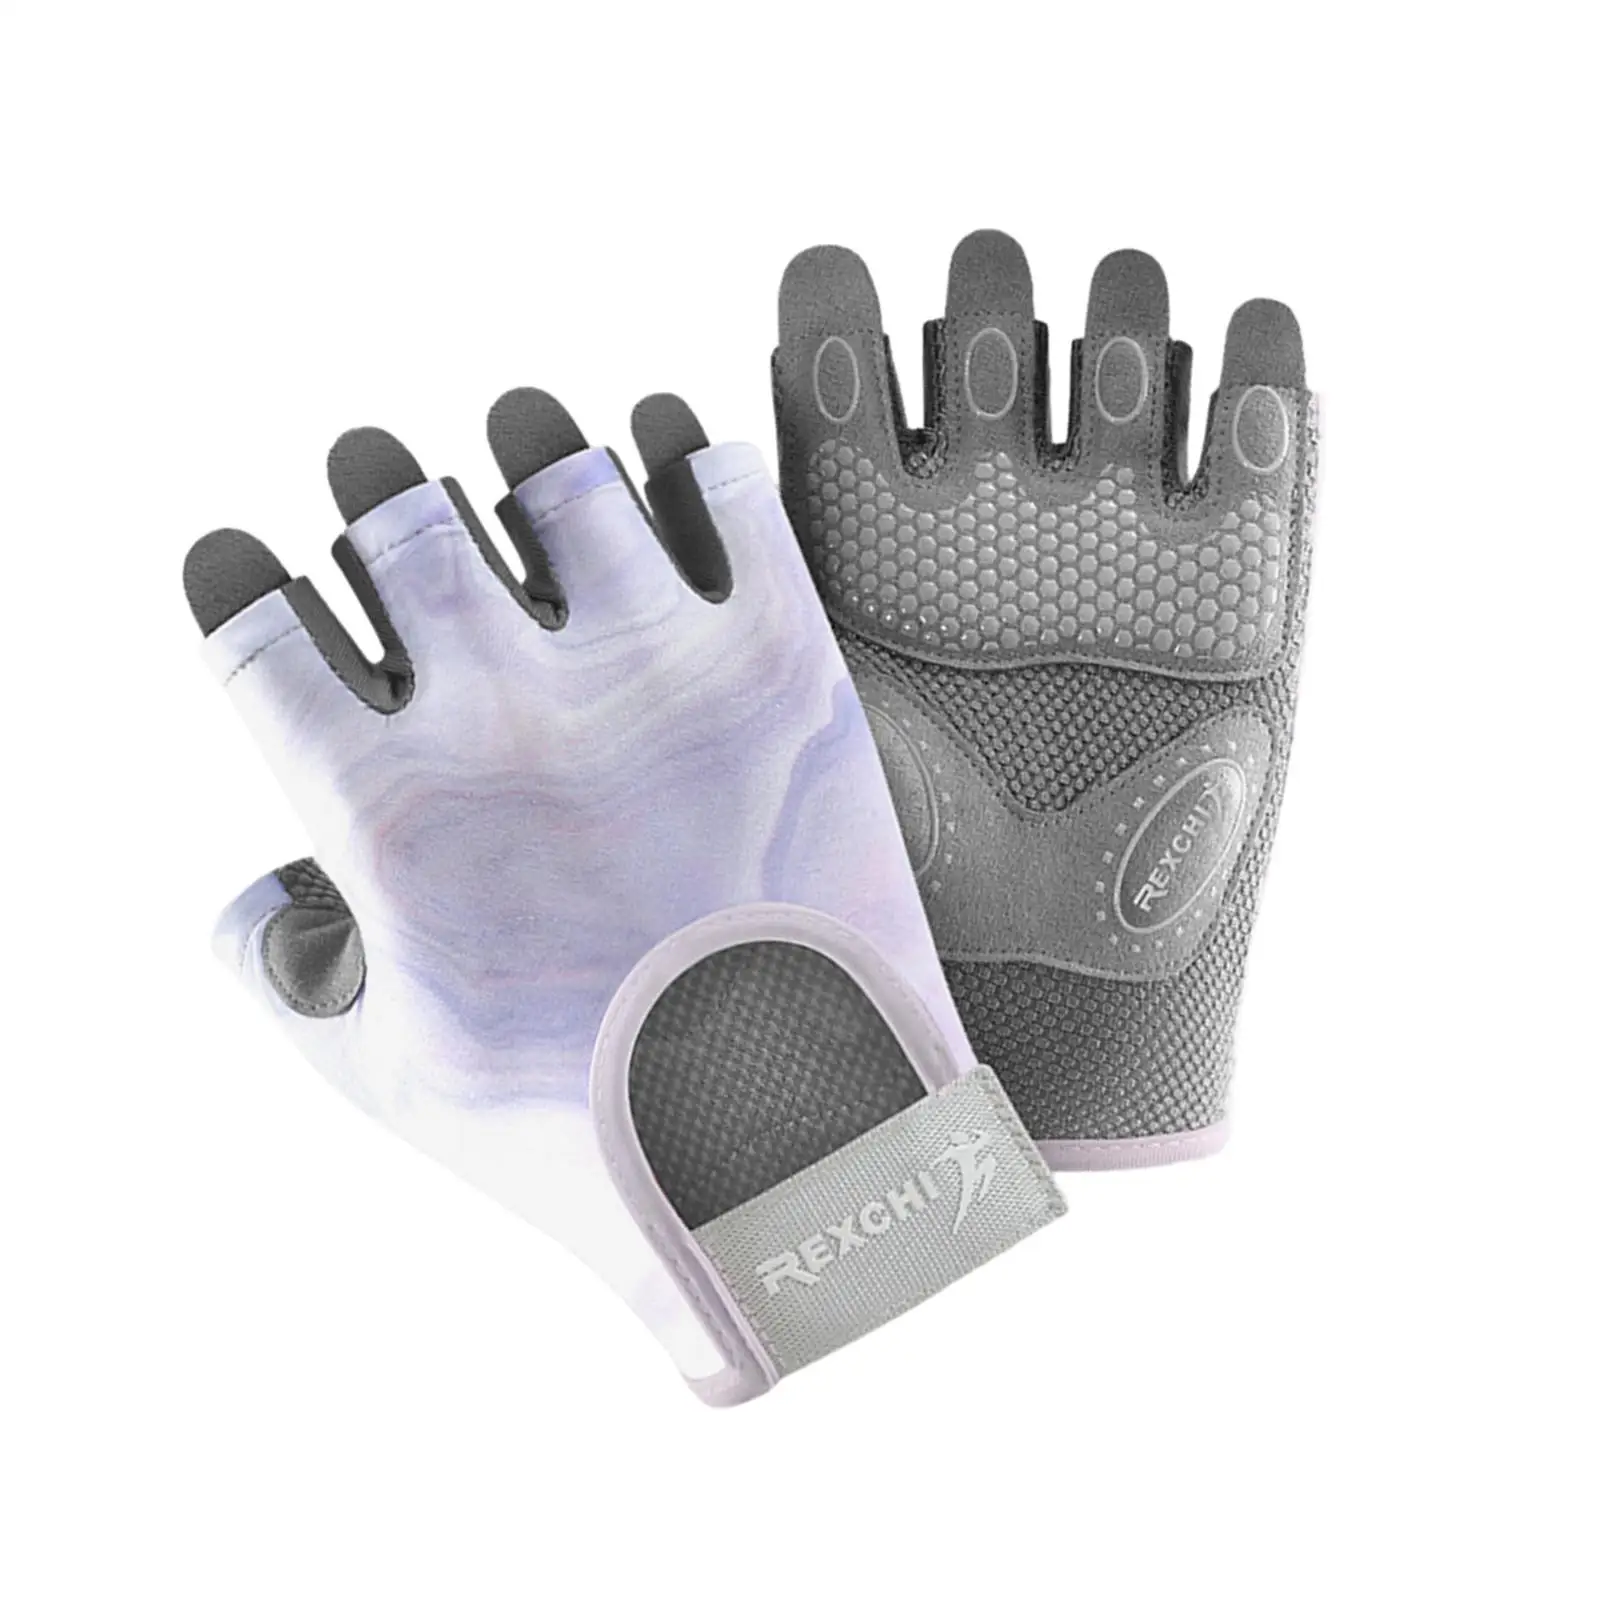 Mountain Bike Gloves Men Women Lightweight Workout Weight Lifting Gloves Fingerless Gloves Half Finger Gloves for Fishing Gym